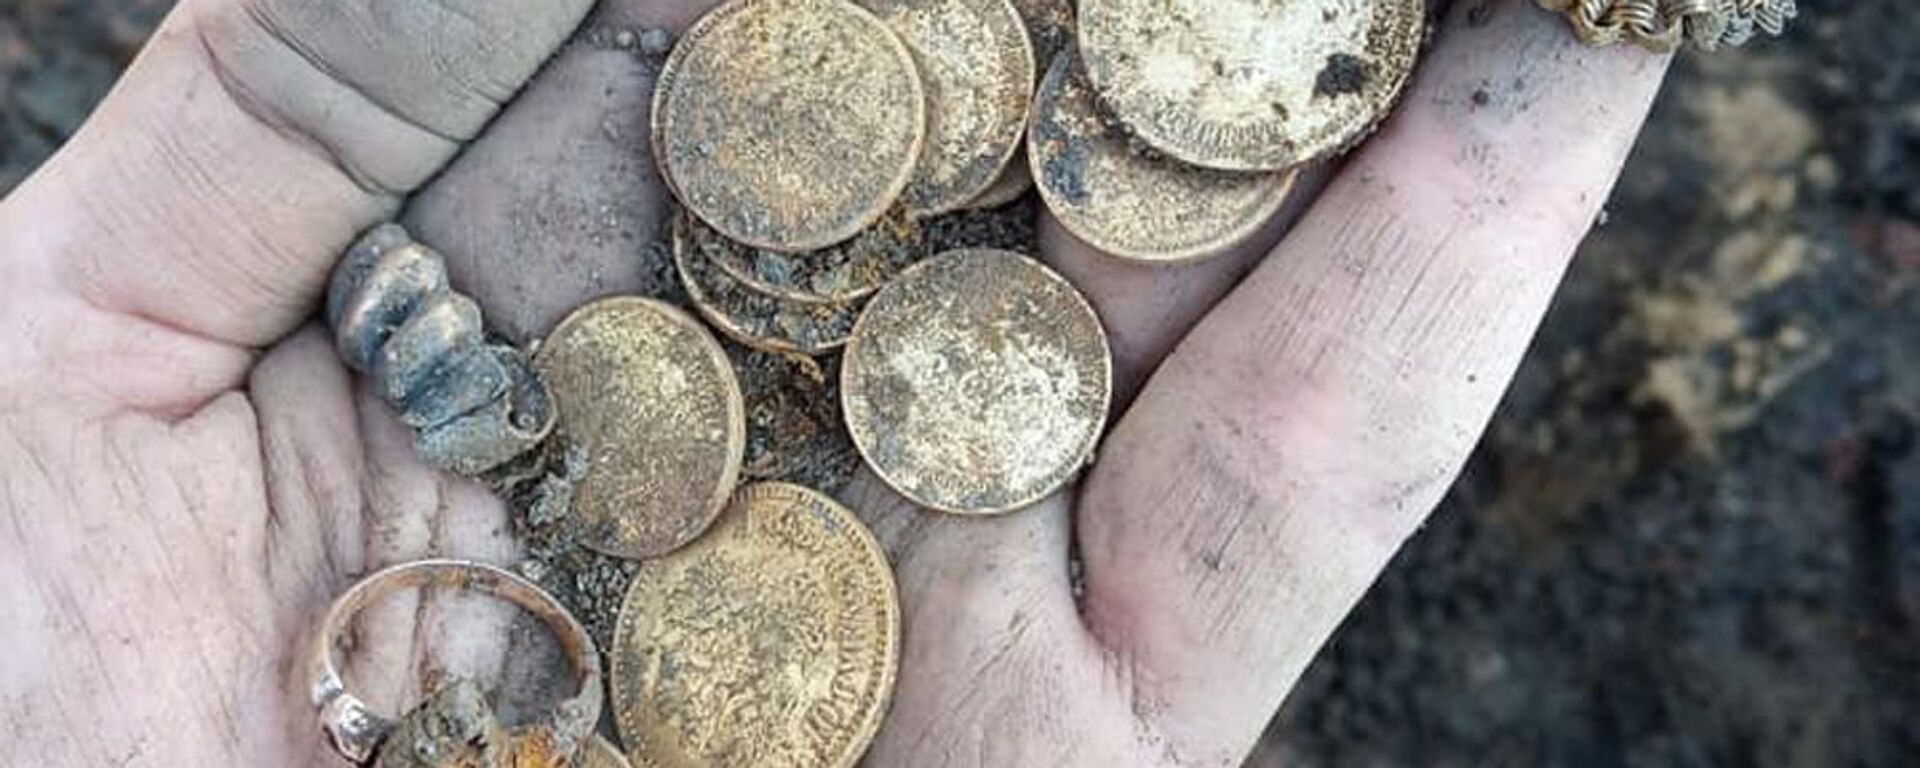 Найденный клад монет - Sputnik Беларусь, 1920, 24.02.2021